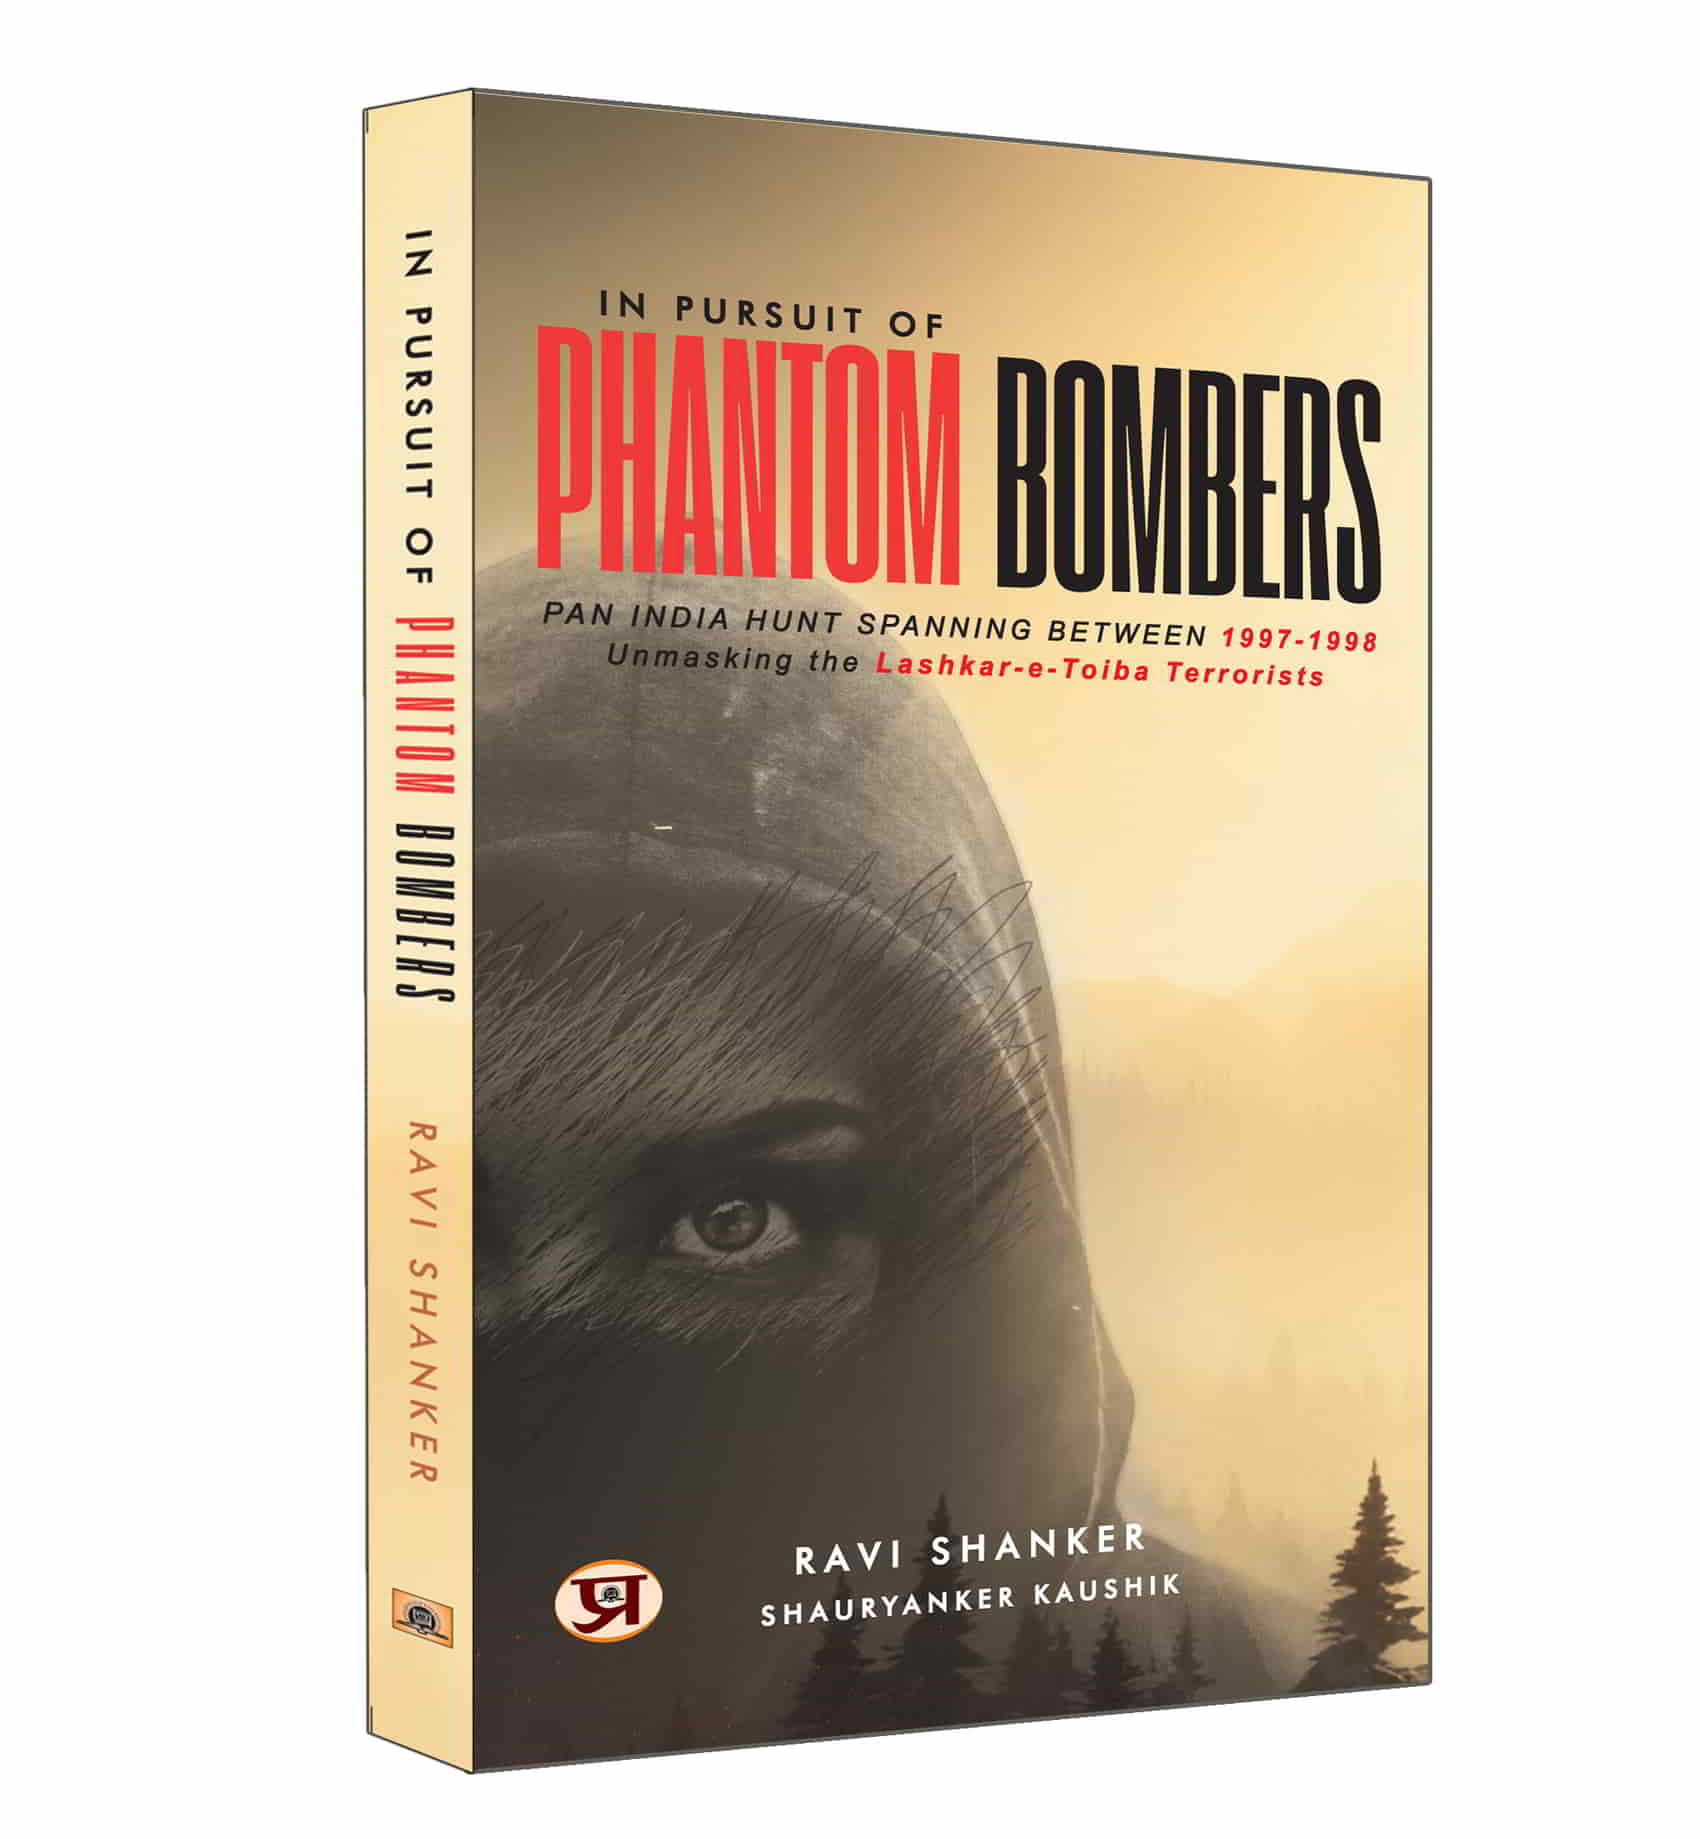 In Pursuit of Phantom Bombers : Pan India Hunt Spanning Between 1997-1998 (Unmasking The Lashker-E-Taiba Terrorists)